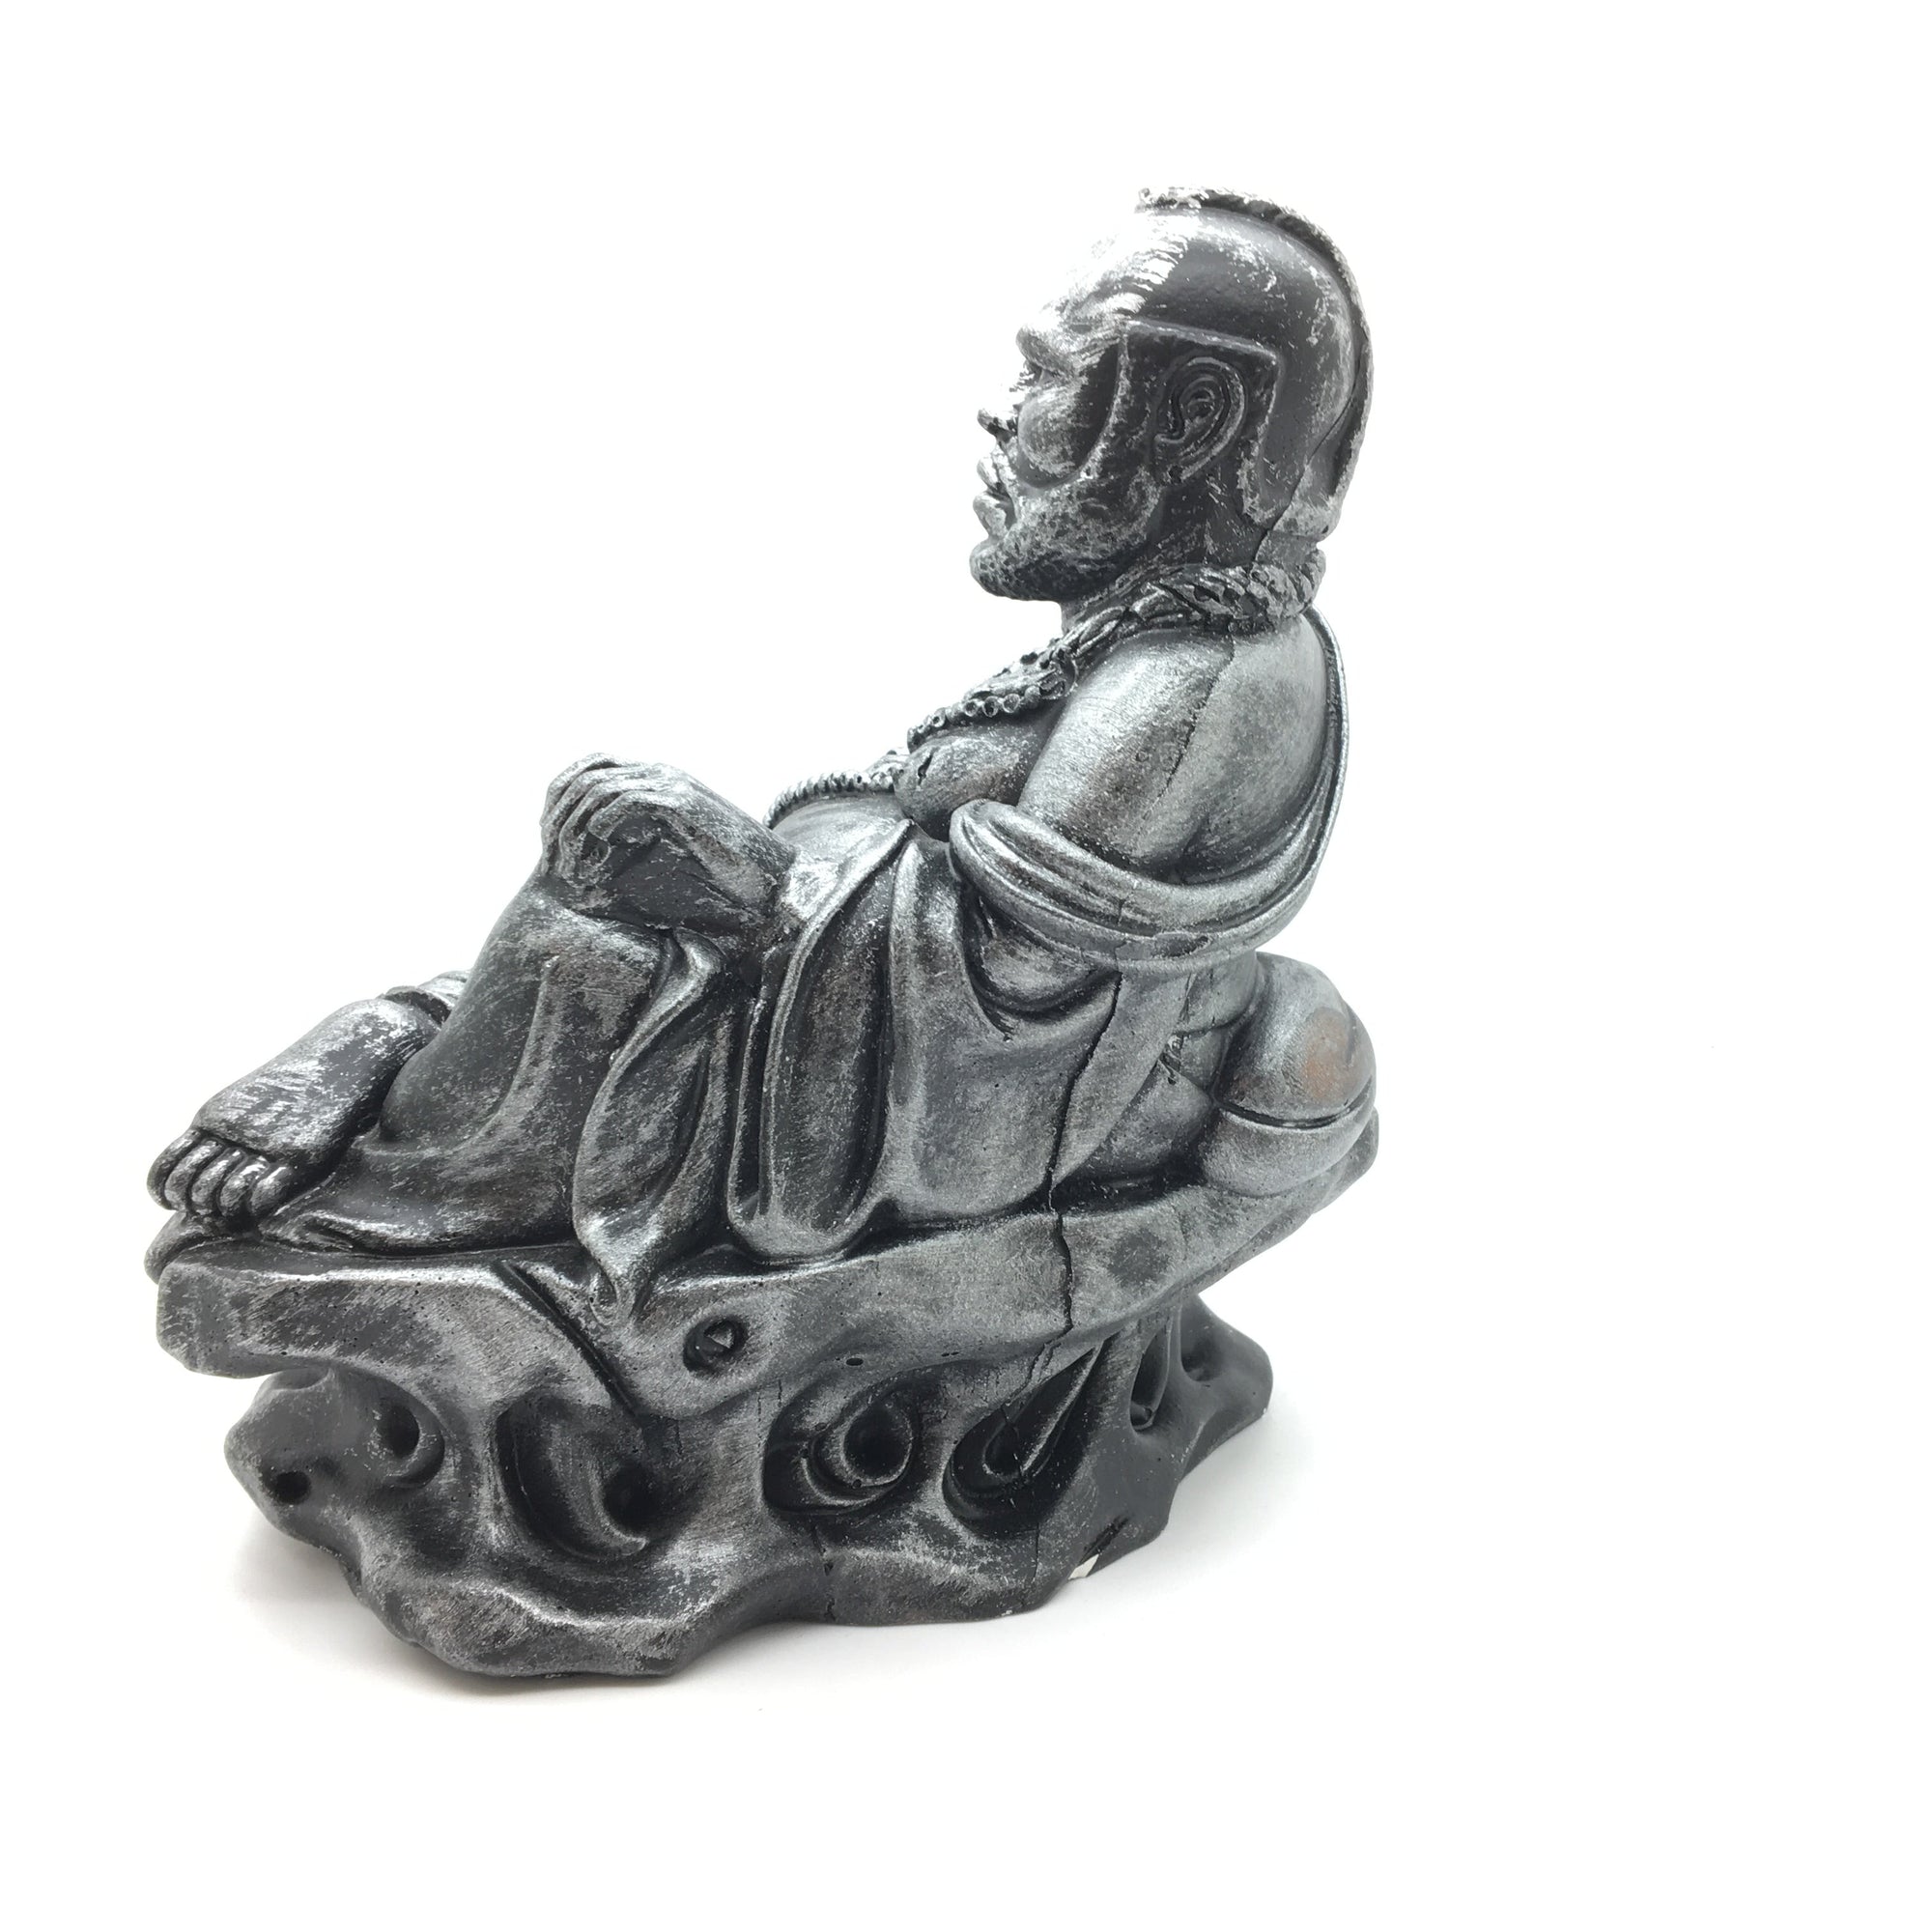 Mr. T Silver Buddha 8-Inch Art Toy Figure by Modulicious